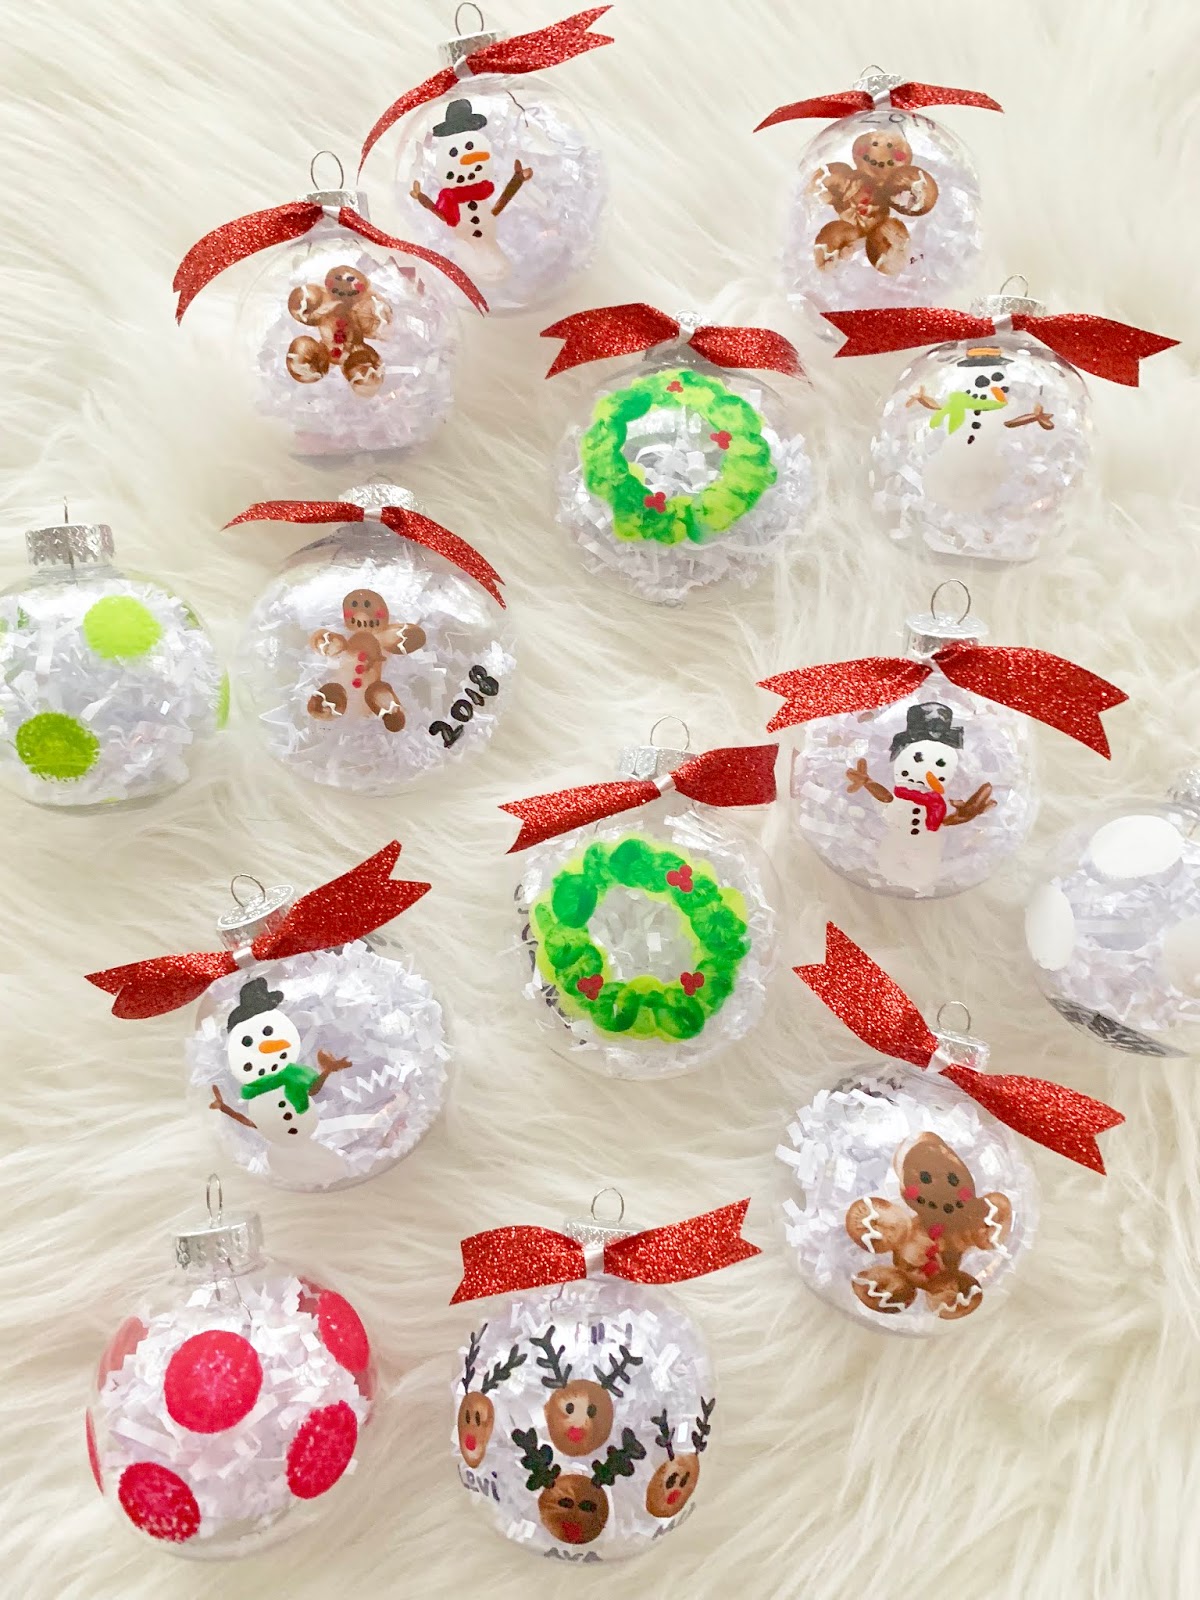 handmade christmas gifts for teachers